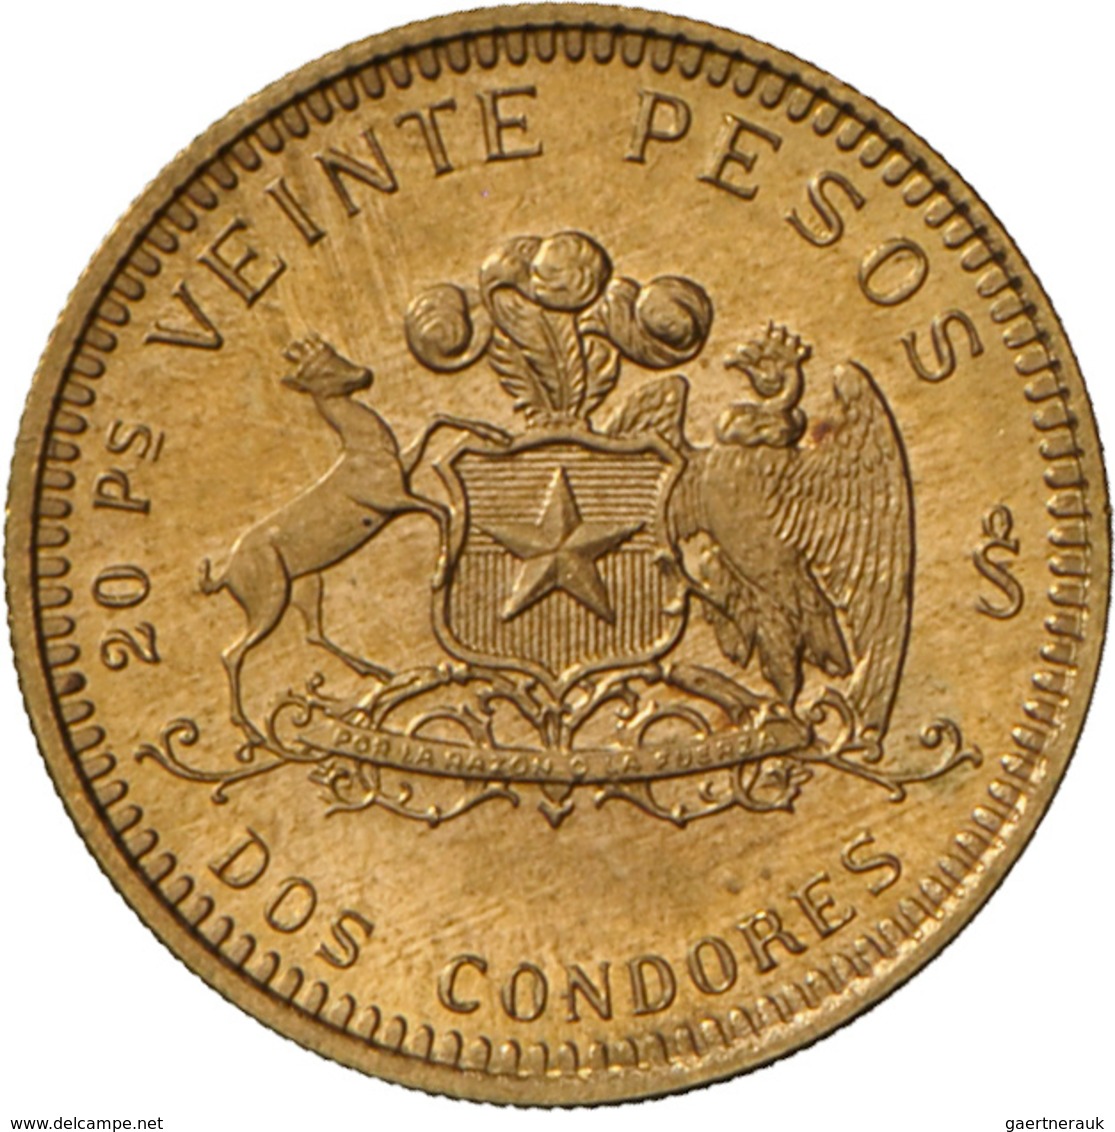 Chile - Anlagegold: Lot 4 Goldmünzen: 2 x 20 Pesos 1976, KM# 188, Friedberg 56. 4,06 g, 900/1000 Gol